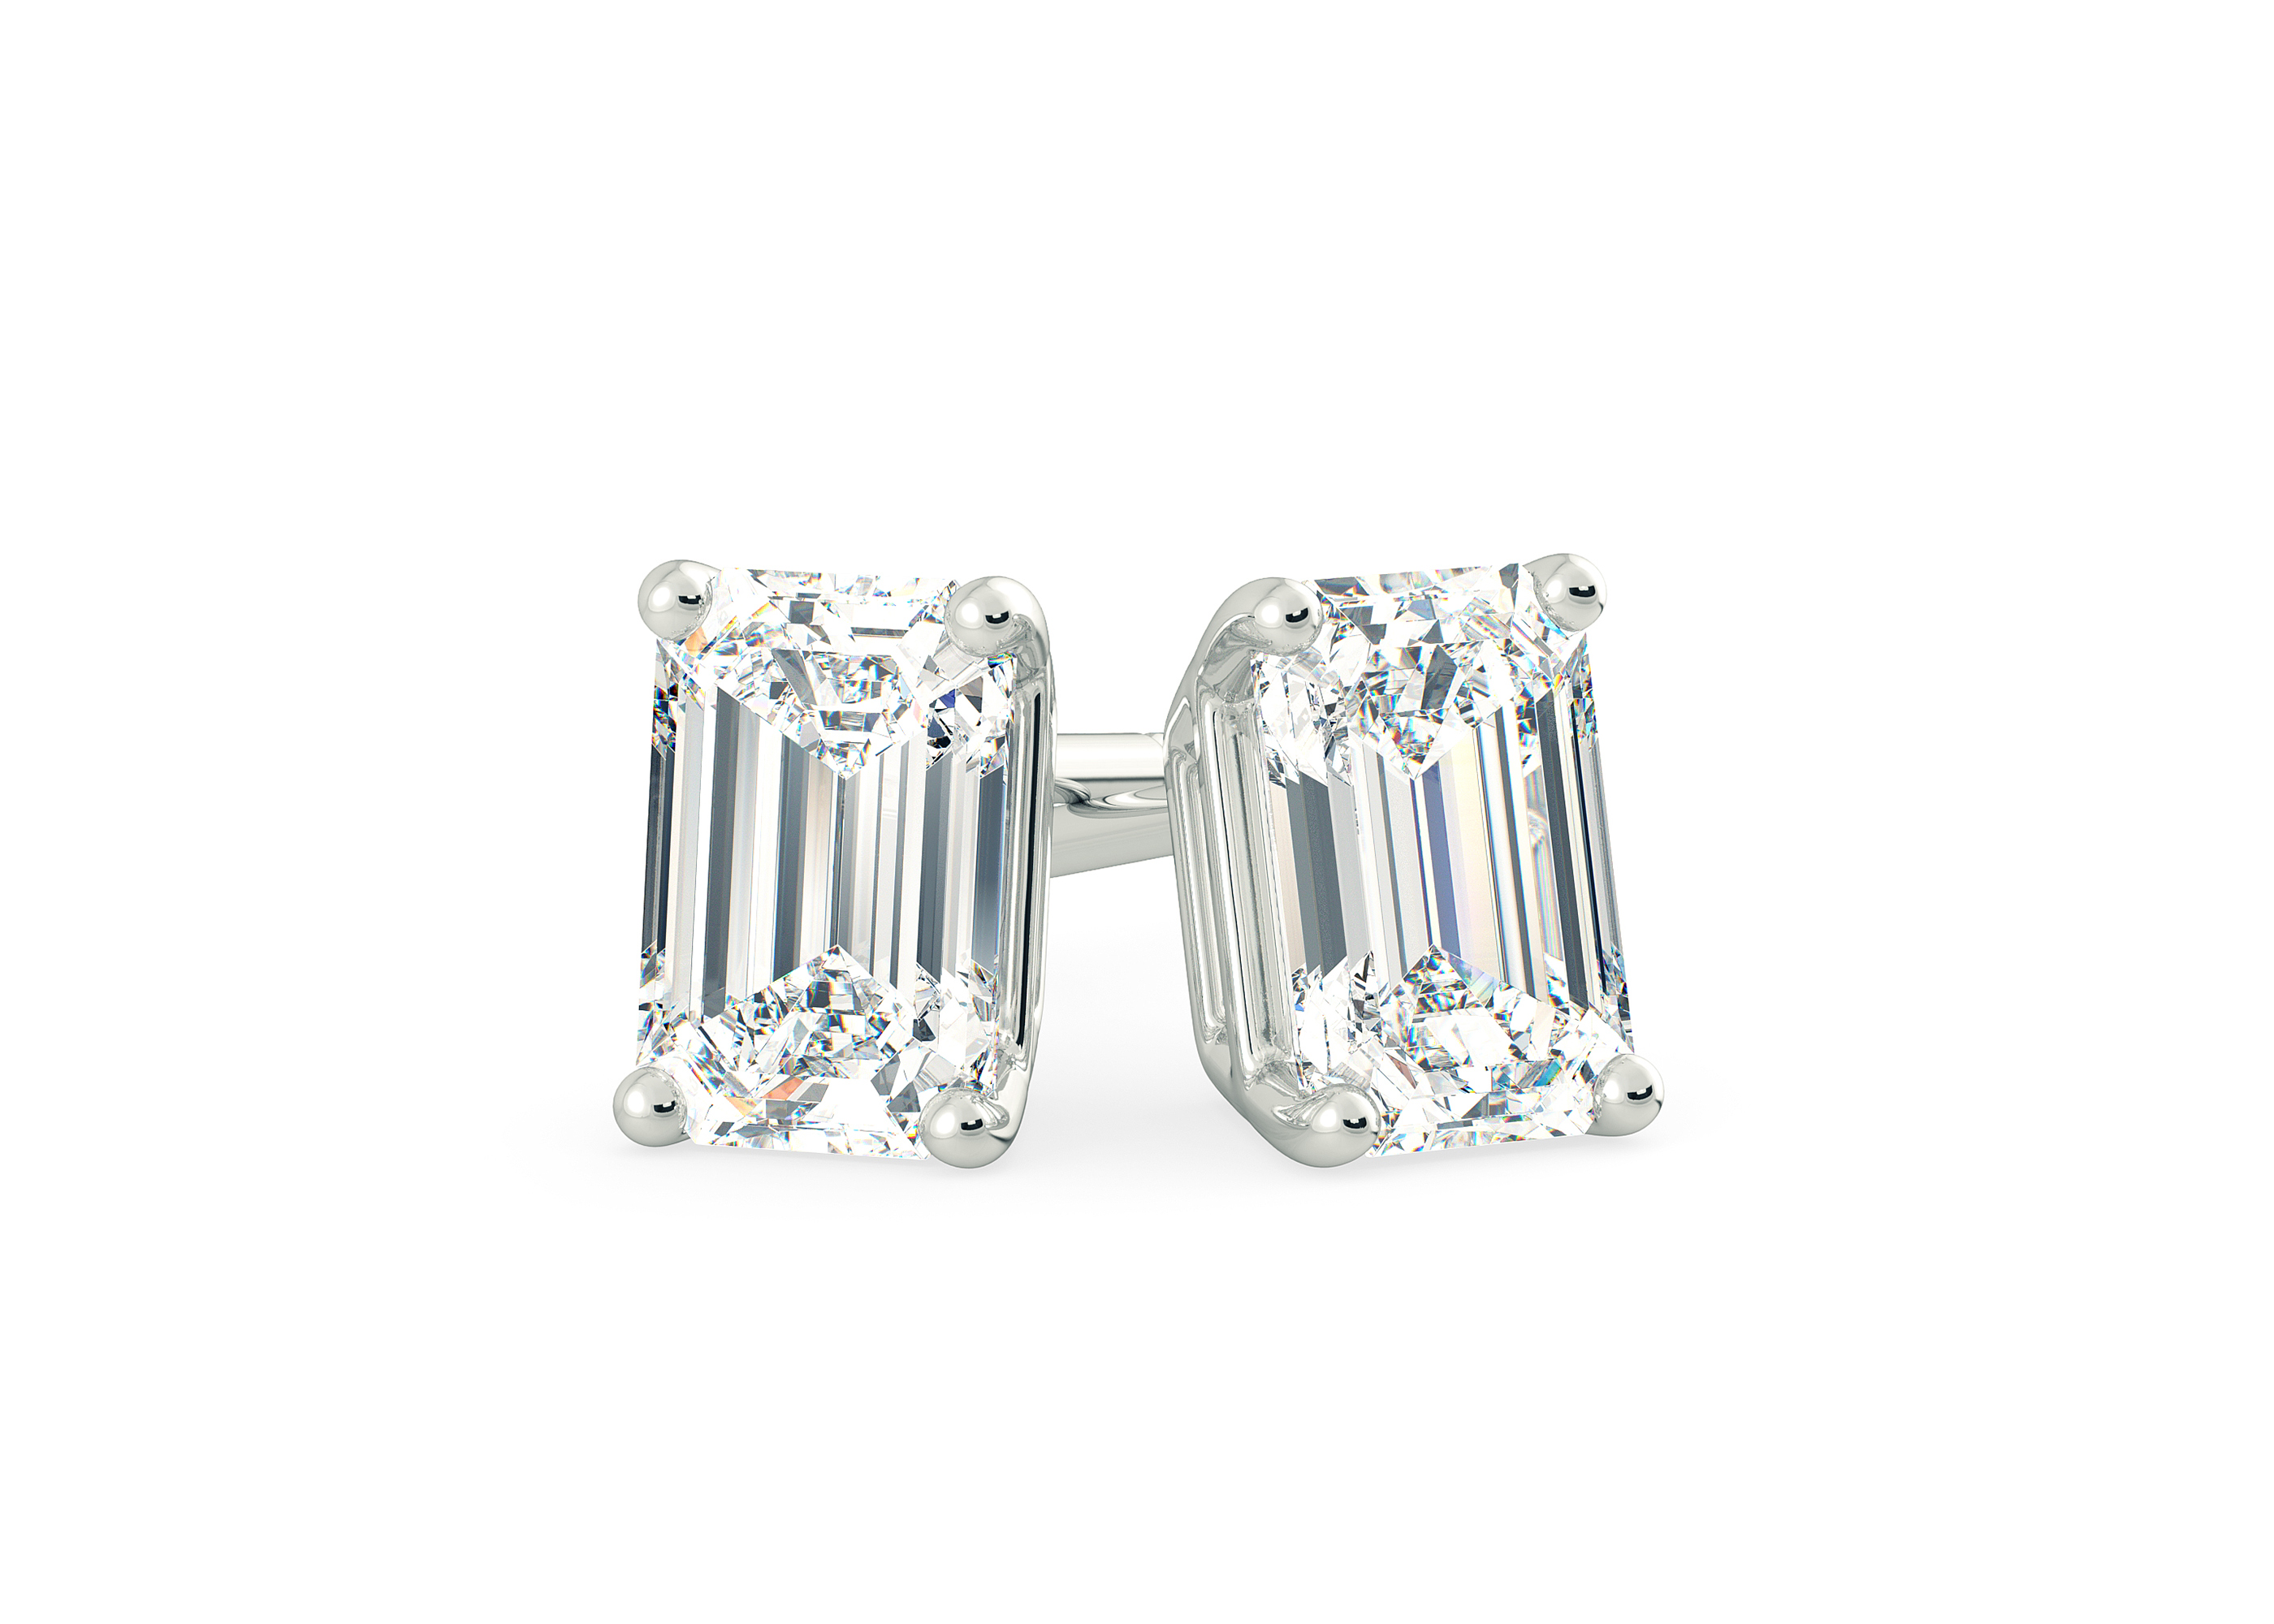 Ettore Emerald Diamond Stud Earrings in 18K White Gold with Alpha Backs